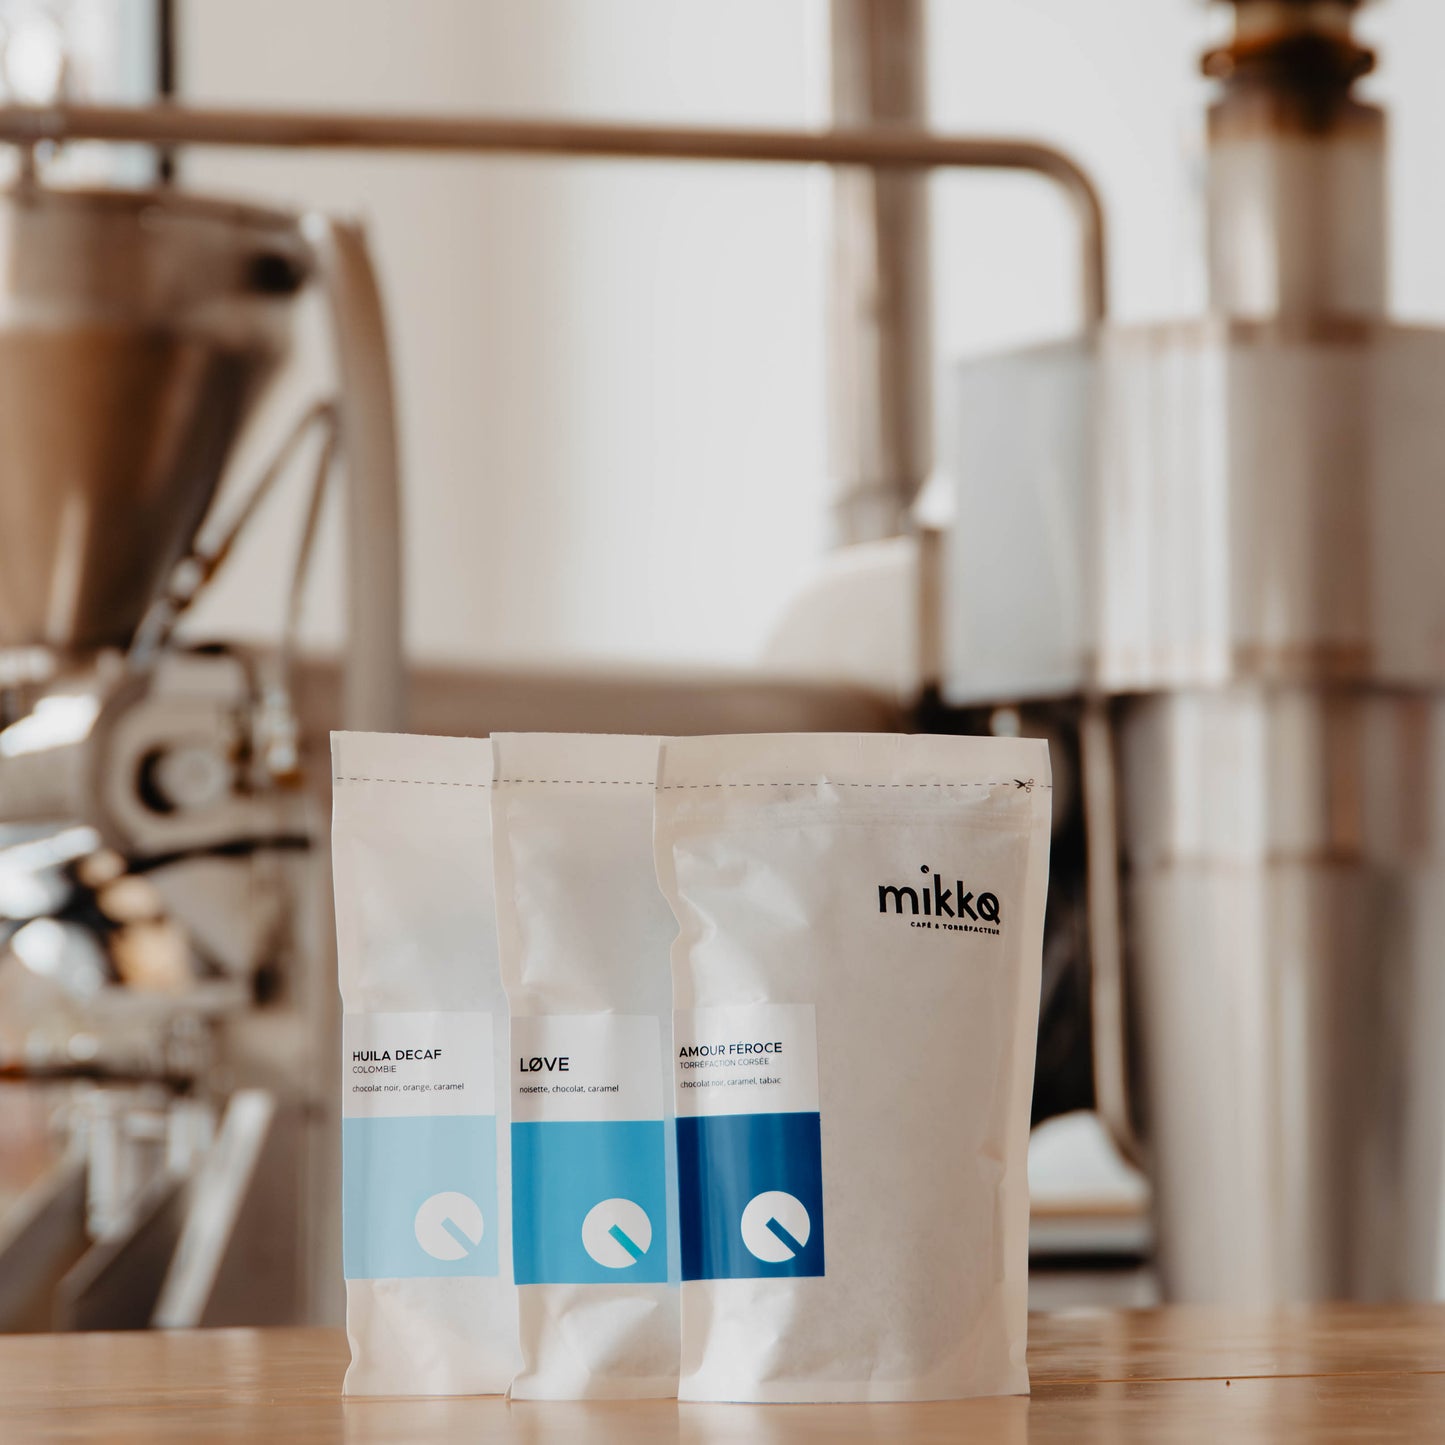 mikko coffee Dawn to Dusk bundle with blue retail bags